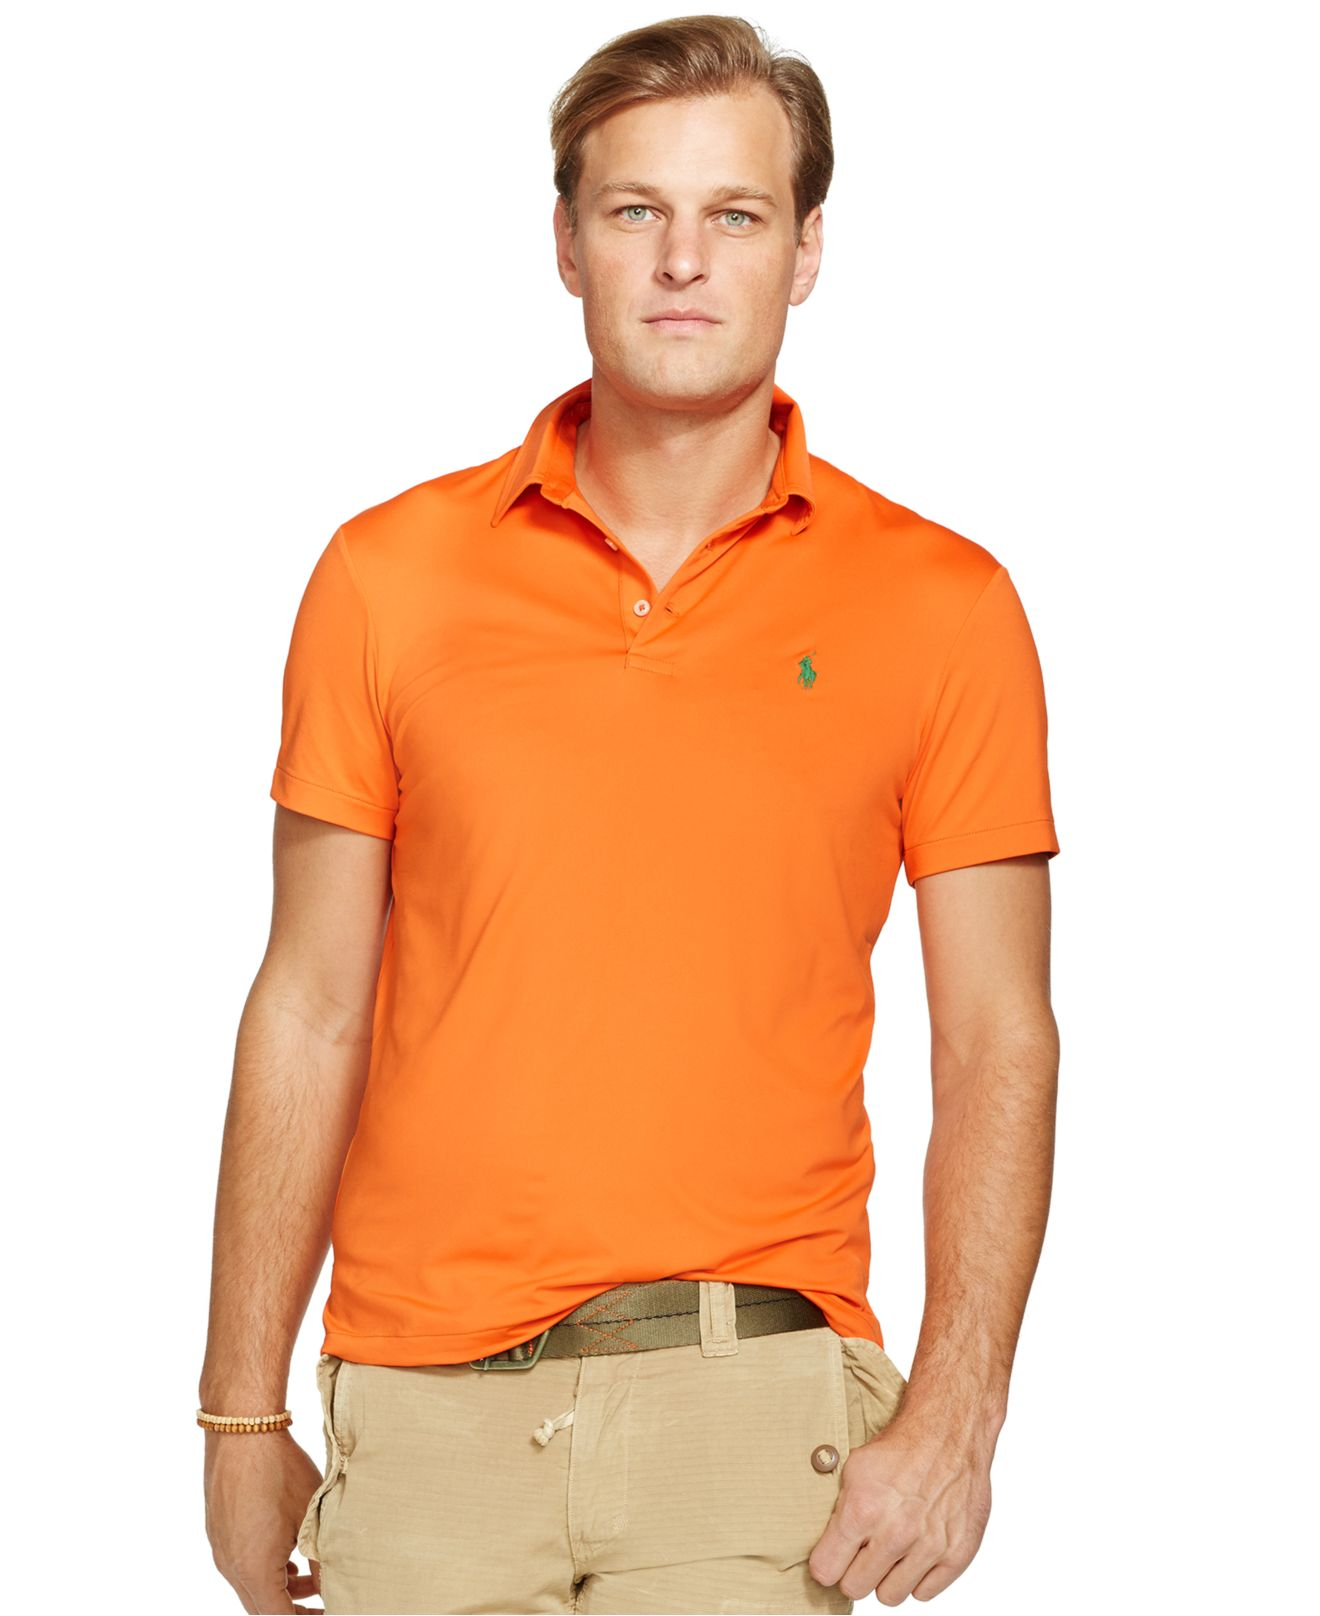 Lyst - Polo Ralph Lauren Big & Tall Performance Polo Shirt in Orange ...